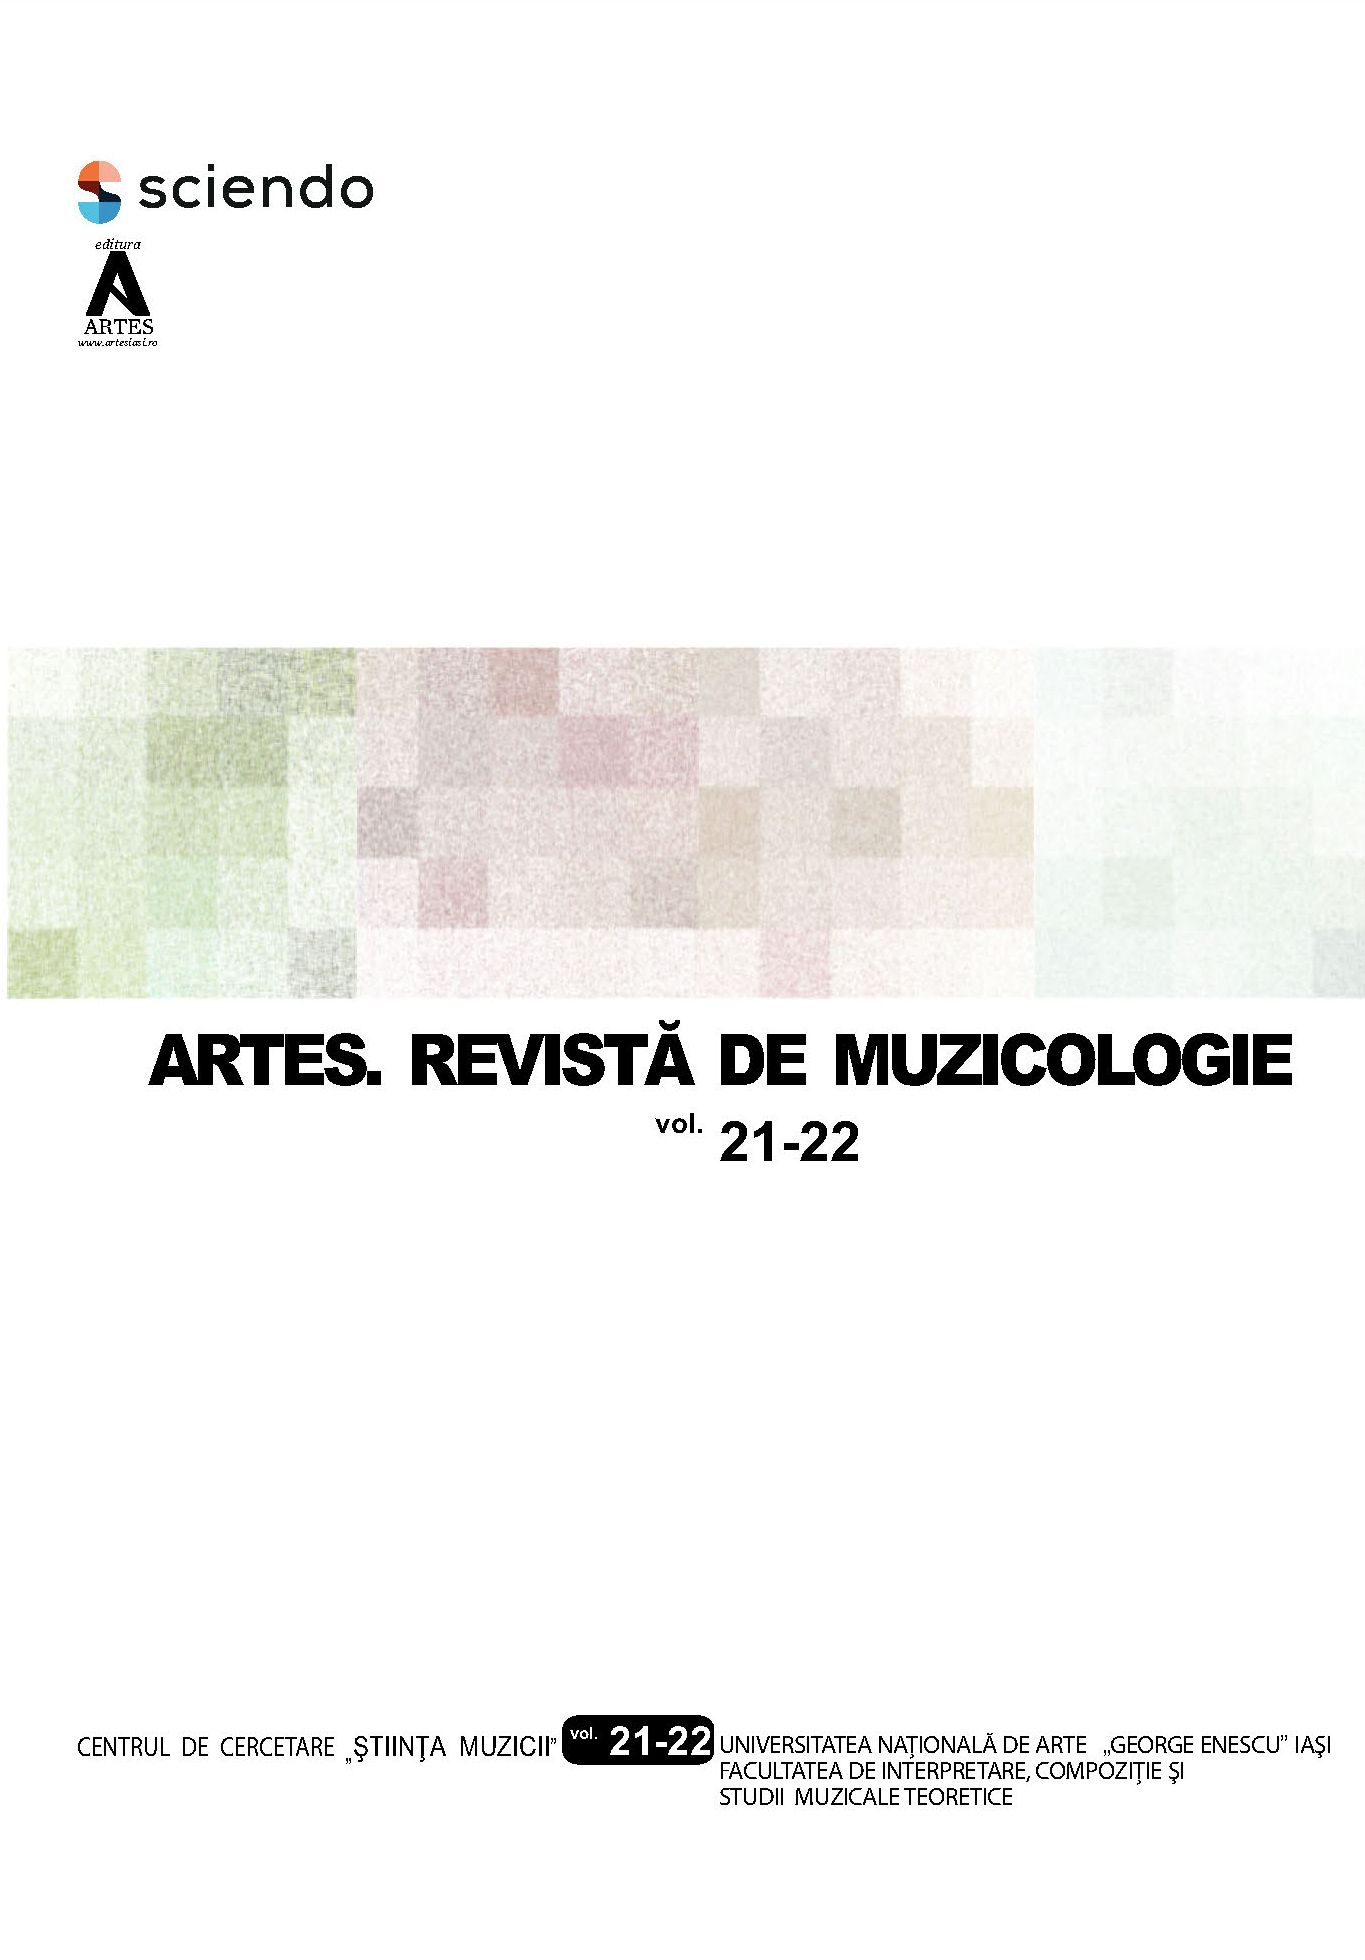 Enescu’s Musical Language in Suite Impresii din copilărie [Impressions of Childhood] Cover Image